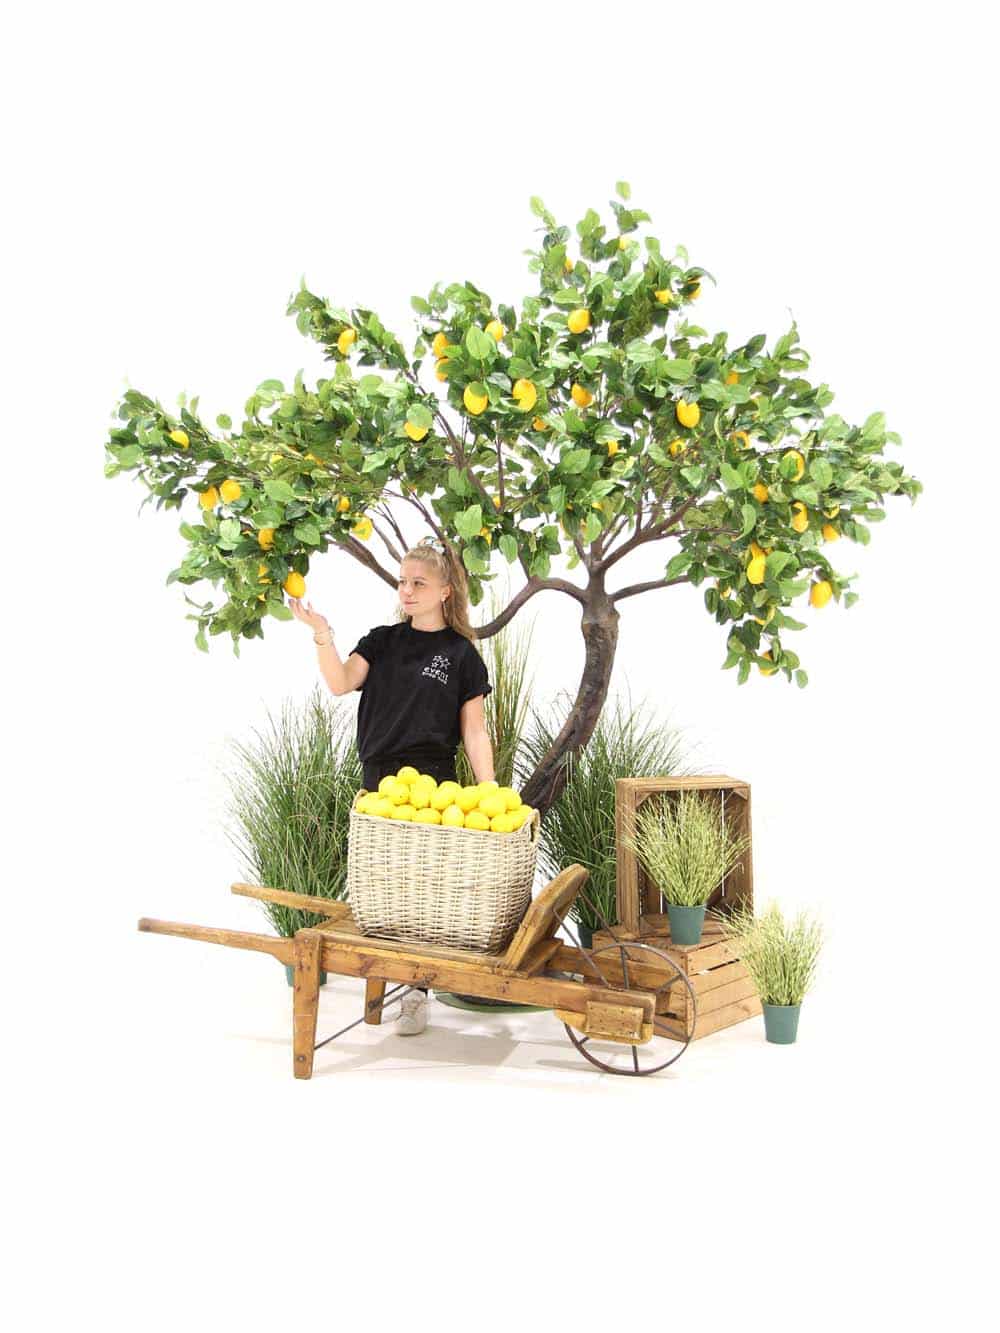 Lemon Tree & Rustic Cart Montage